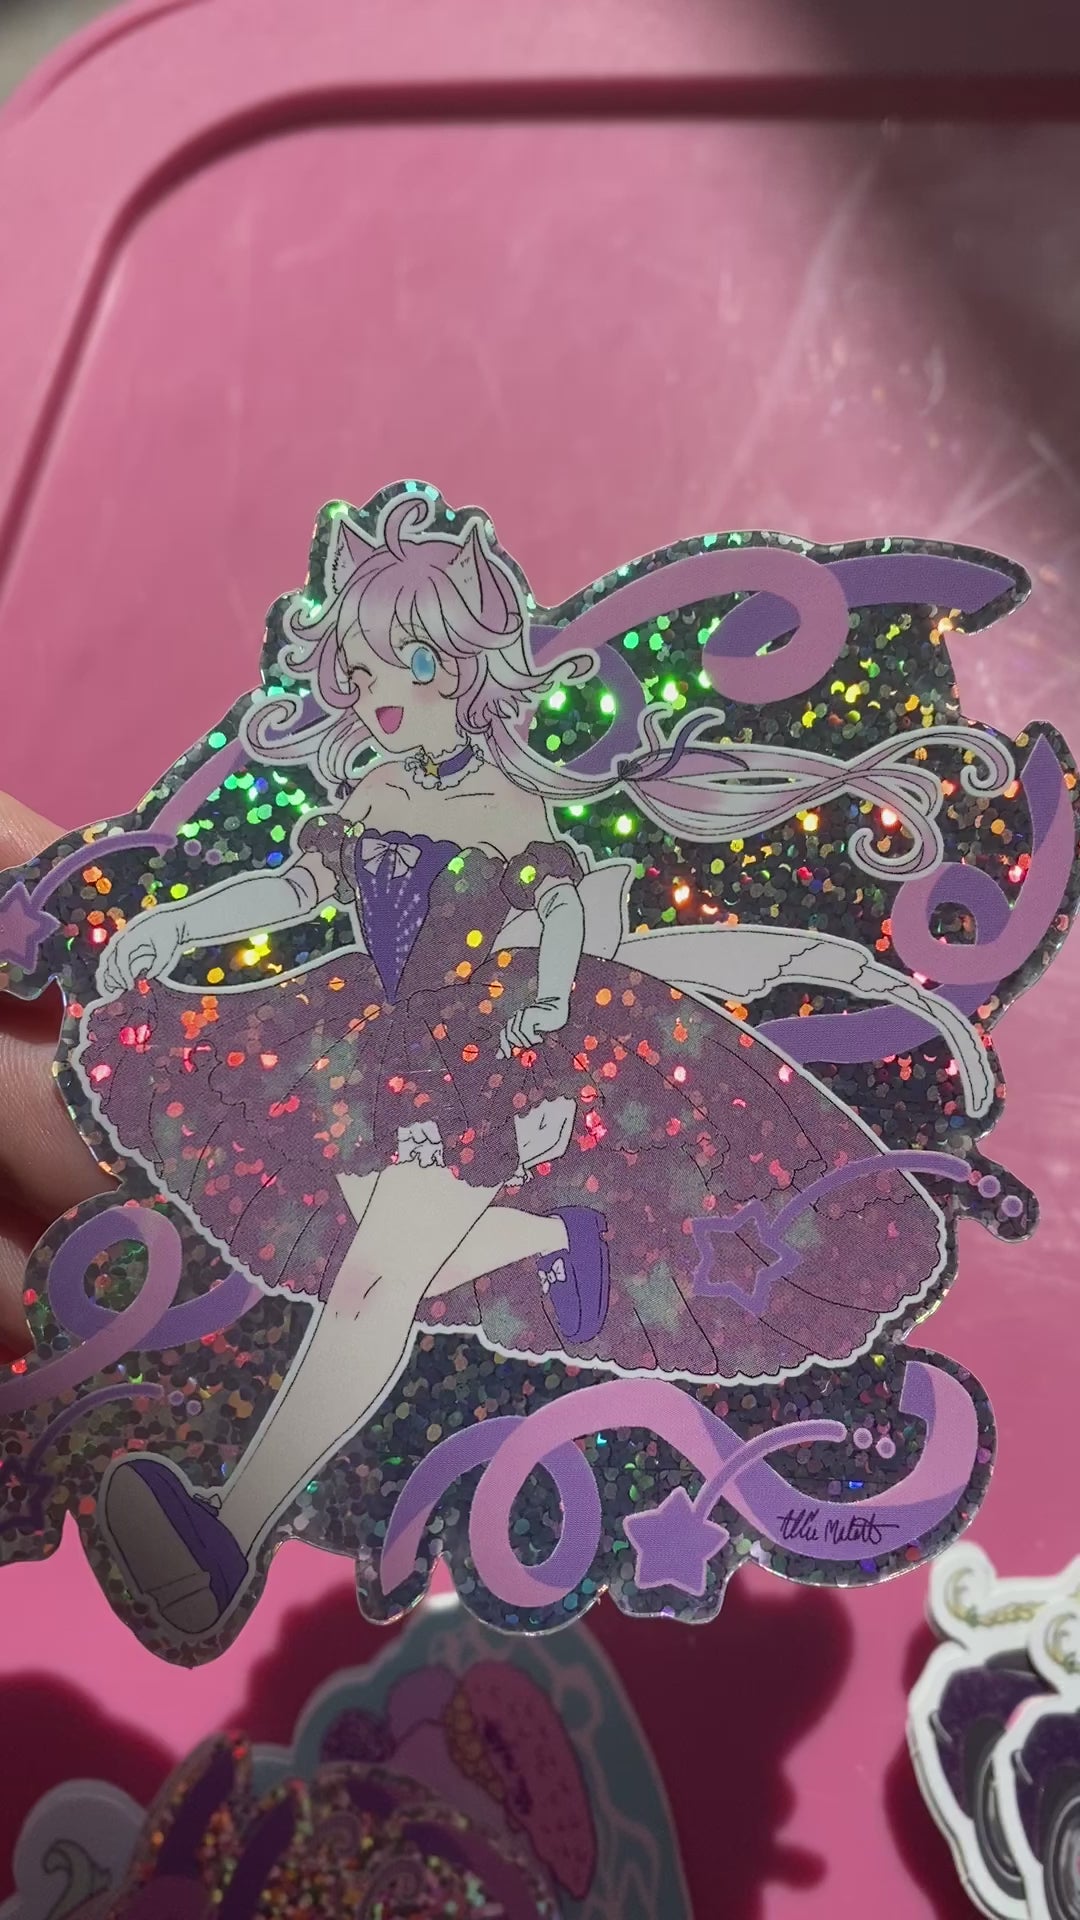 Magical Princess Sky festive dress magical girl glitter sticker 4 inch